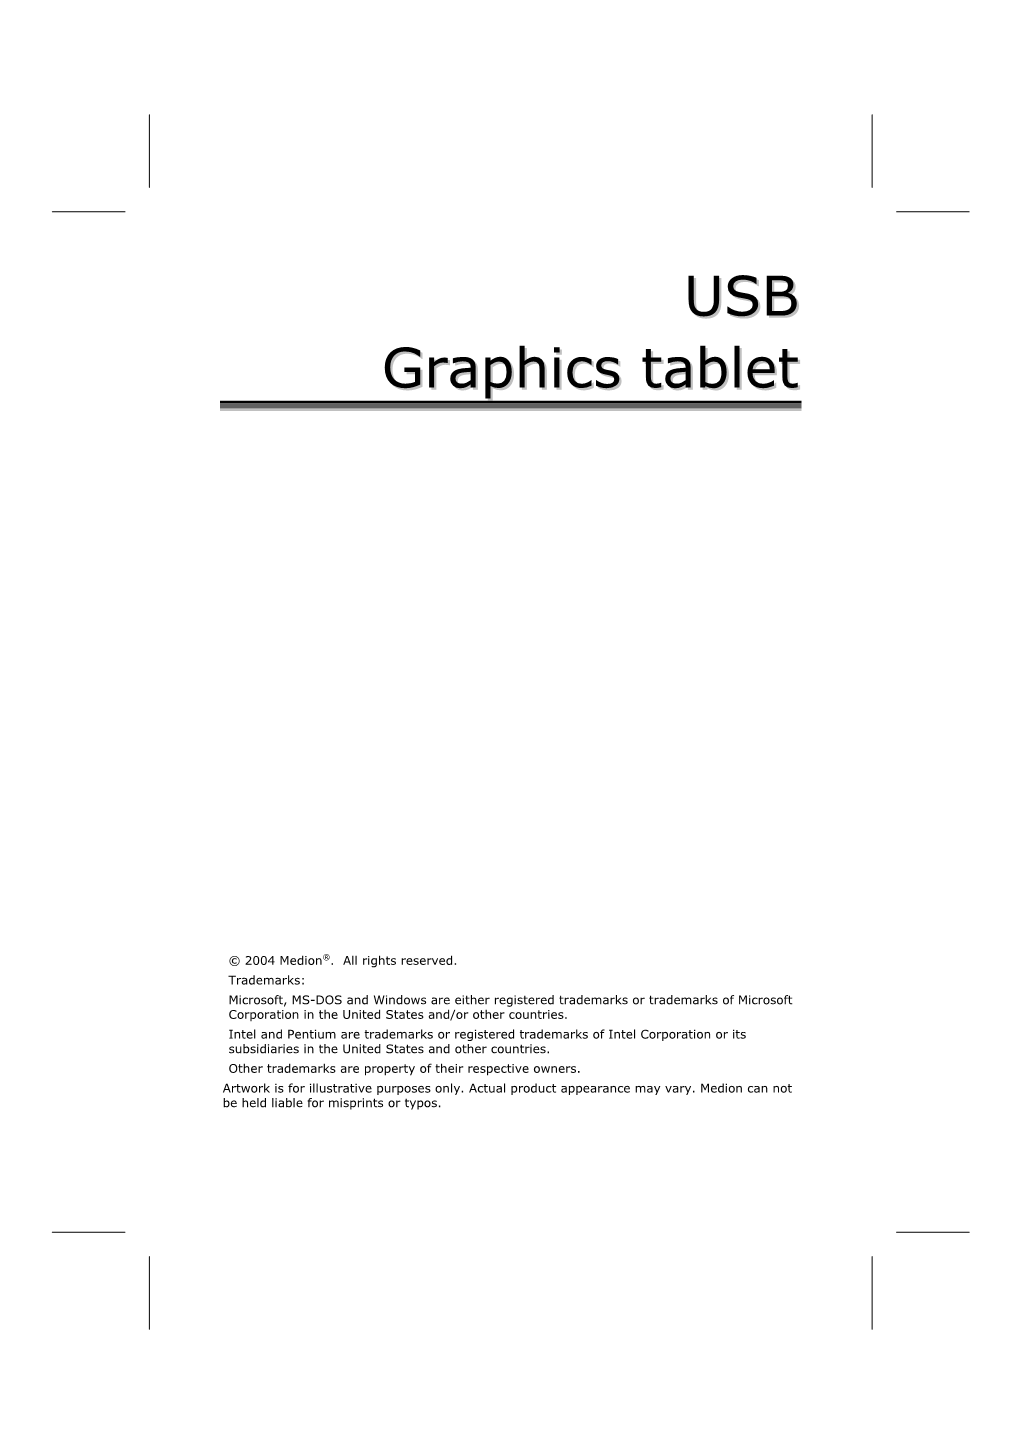 USB Graphics Tablet